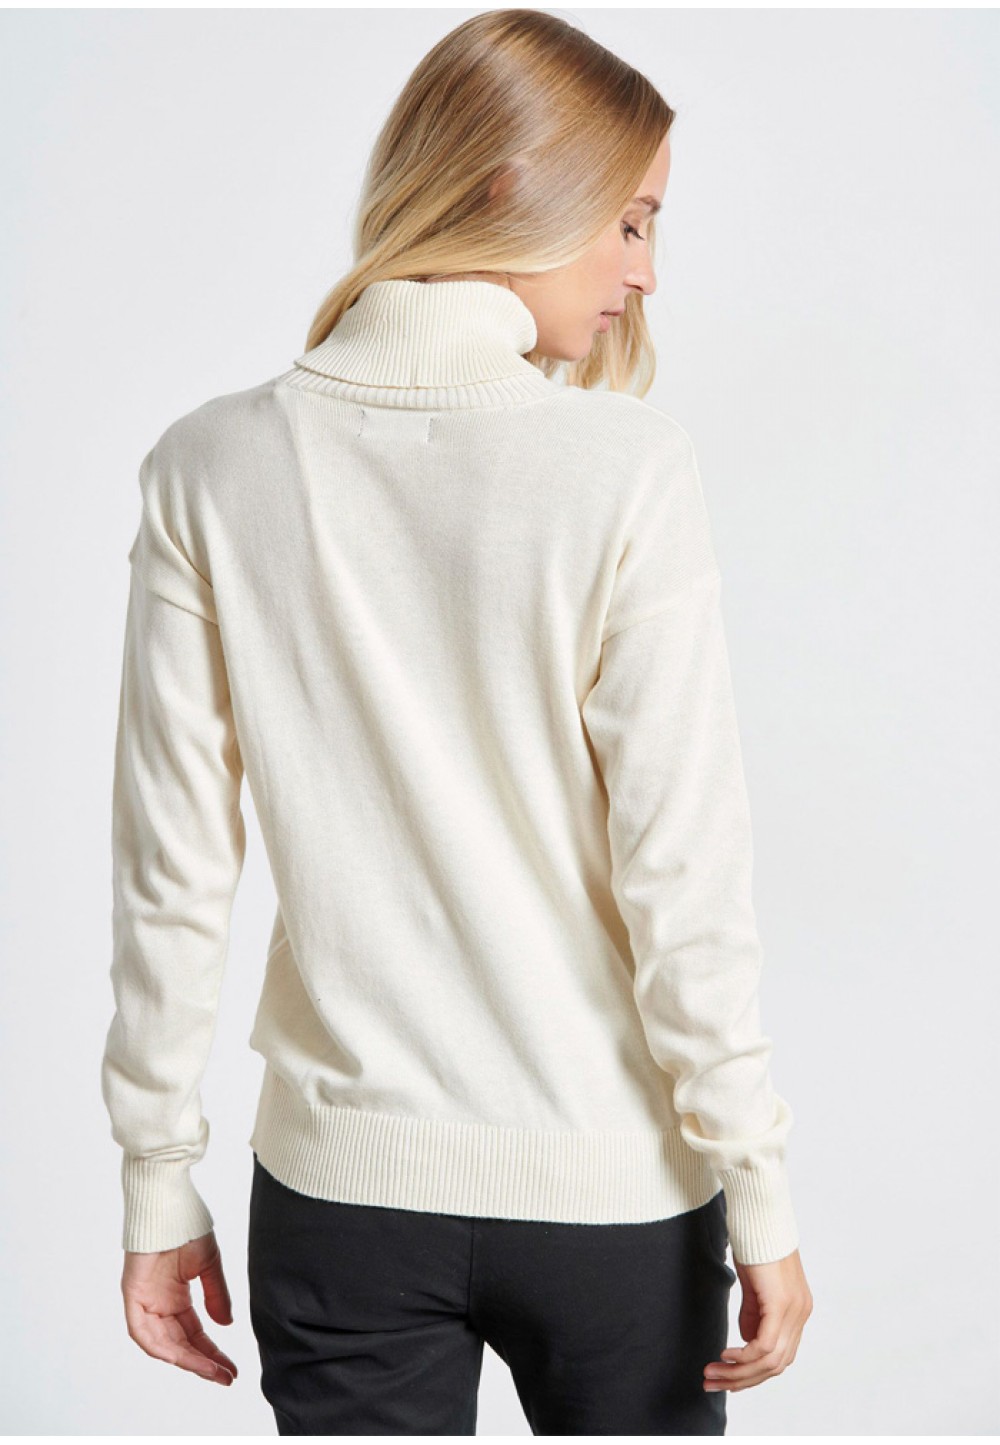 Женский белый пуловер